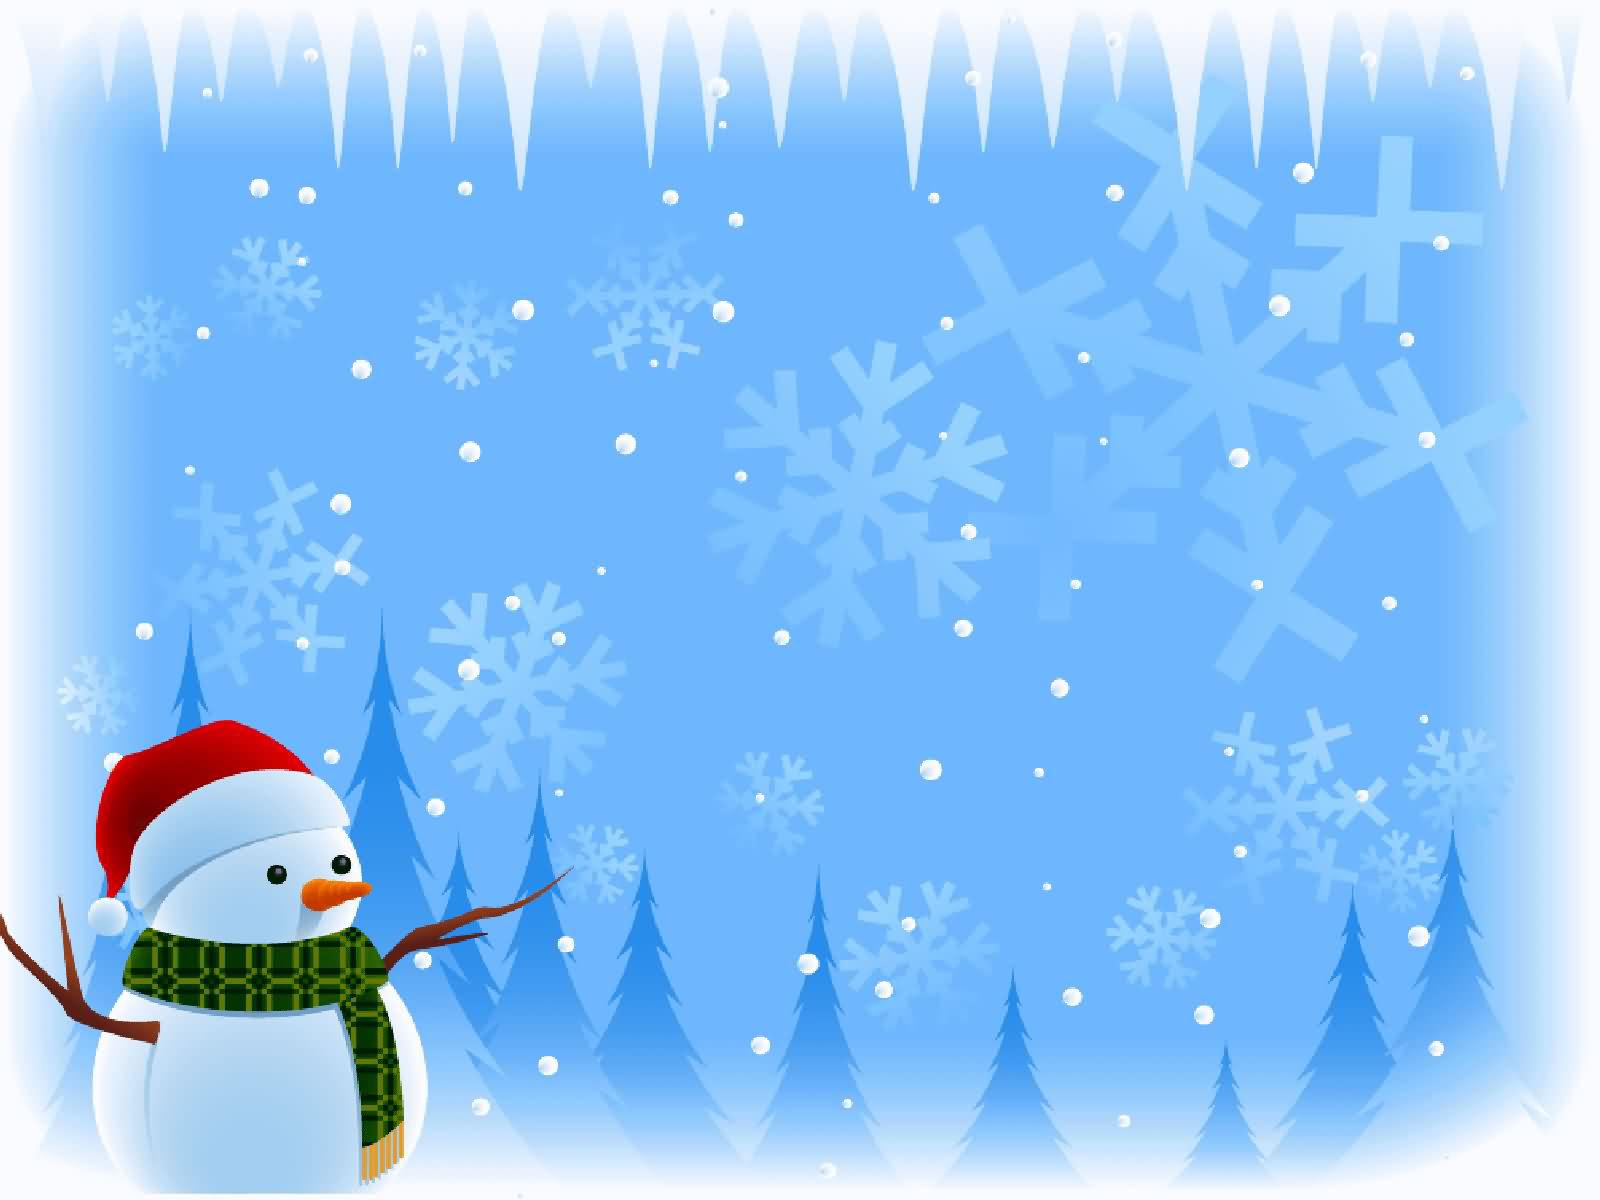 PC-Wallpapers - Free Christmas Desktop Wallpaper Backgrounds